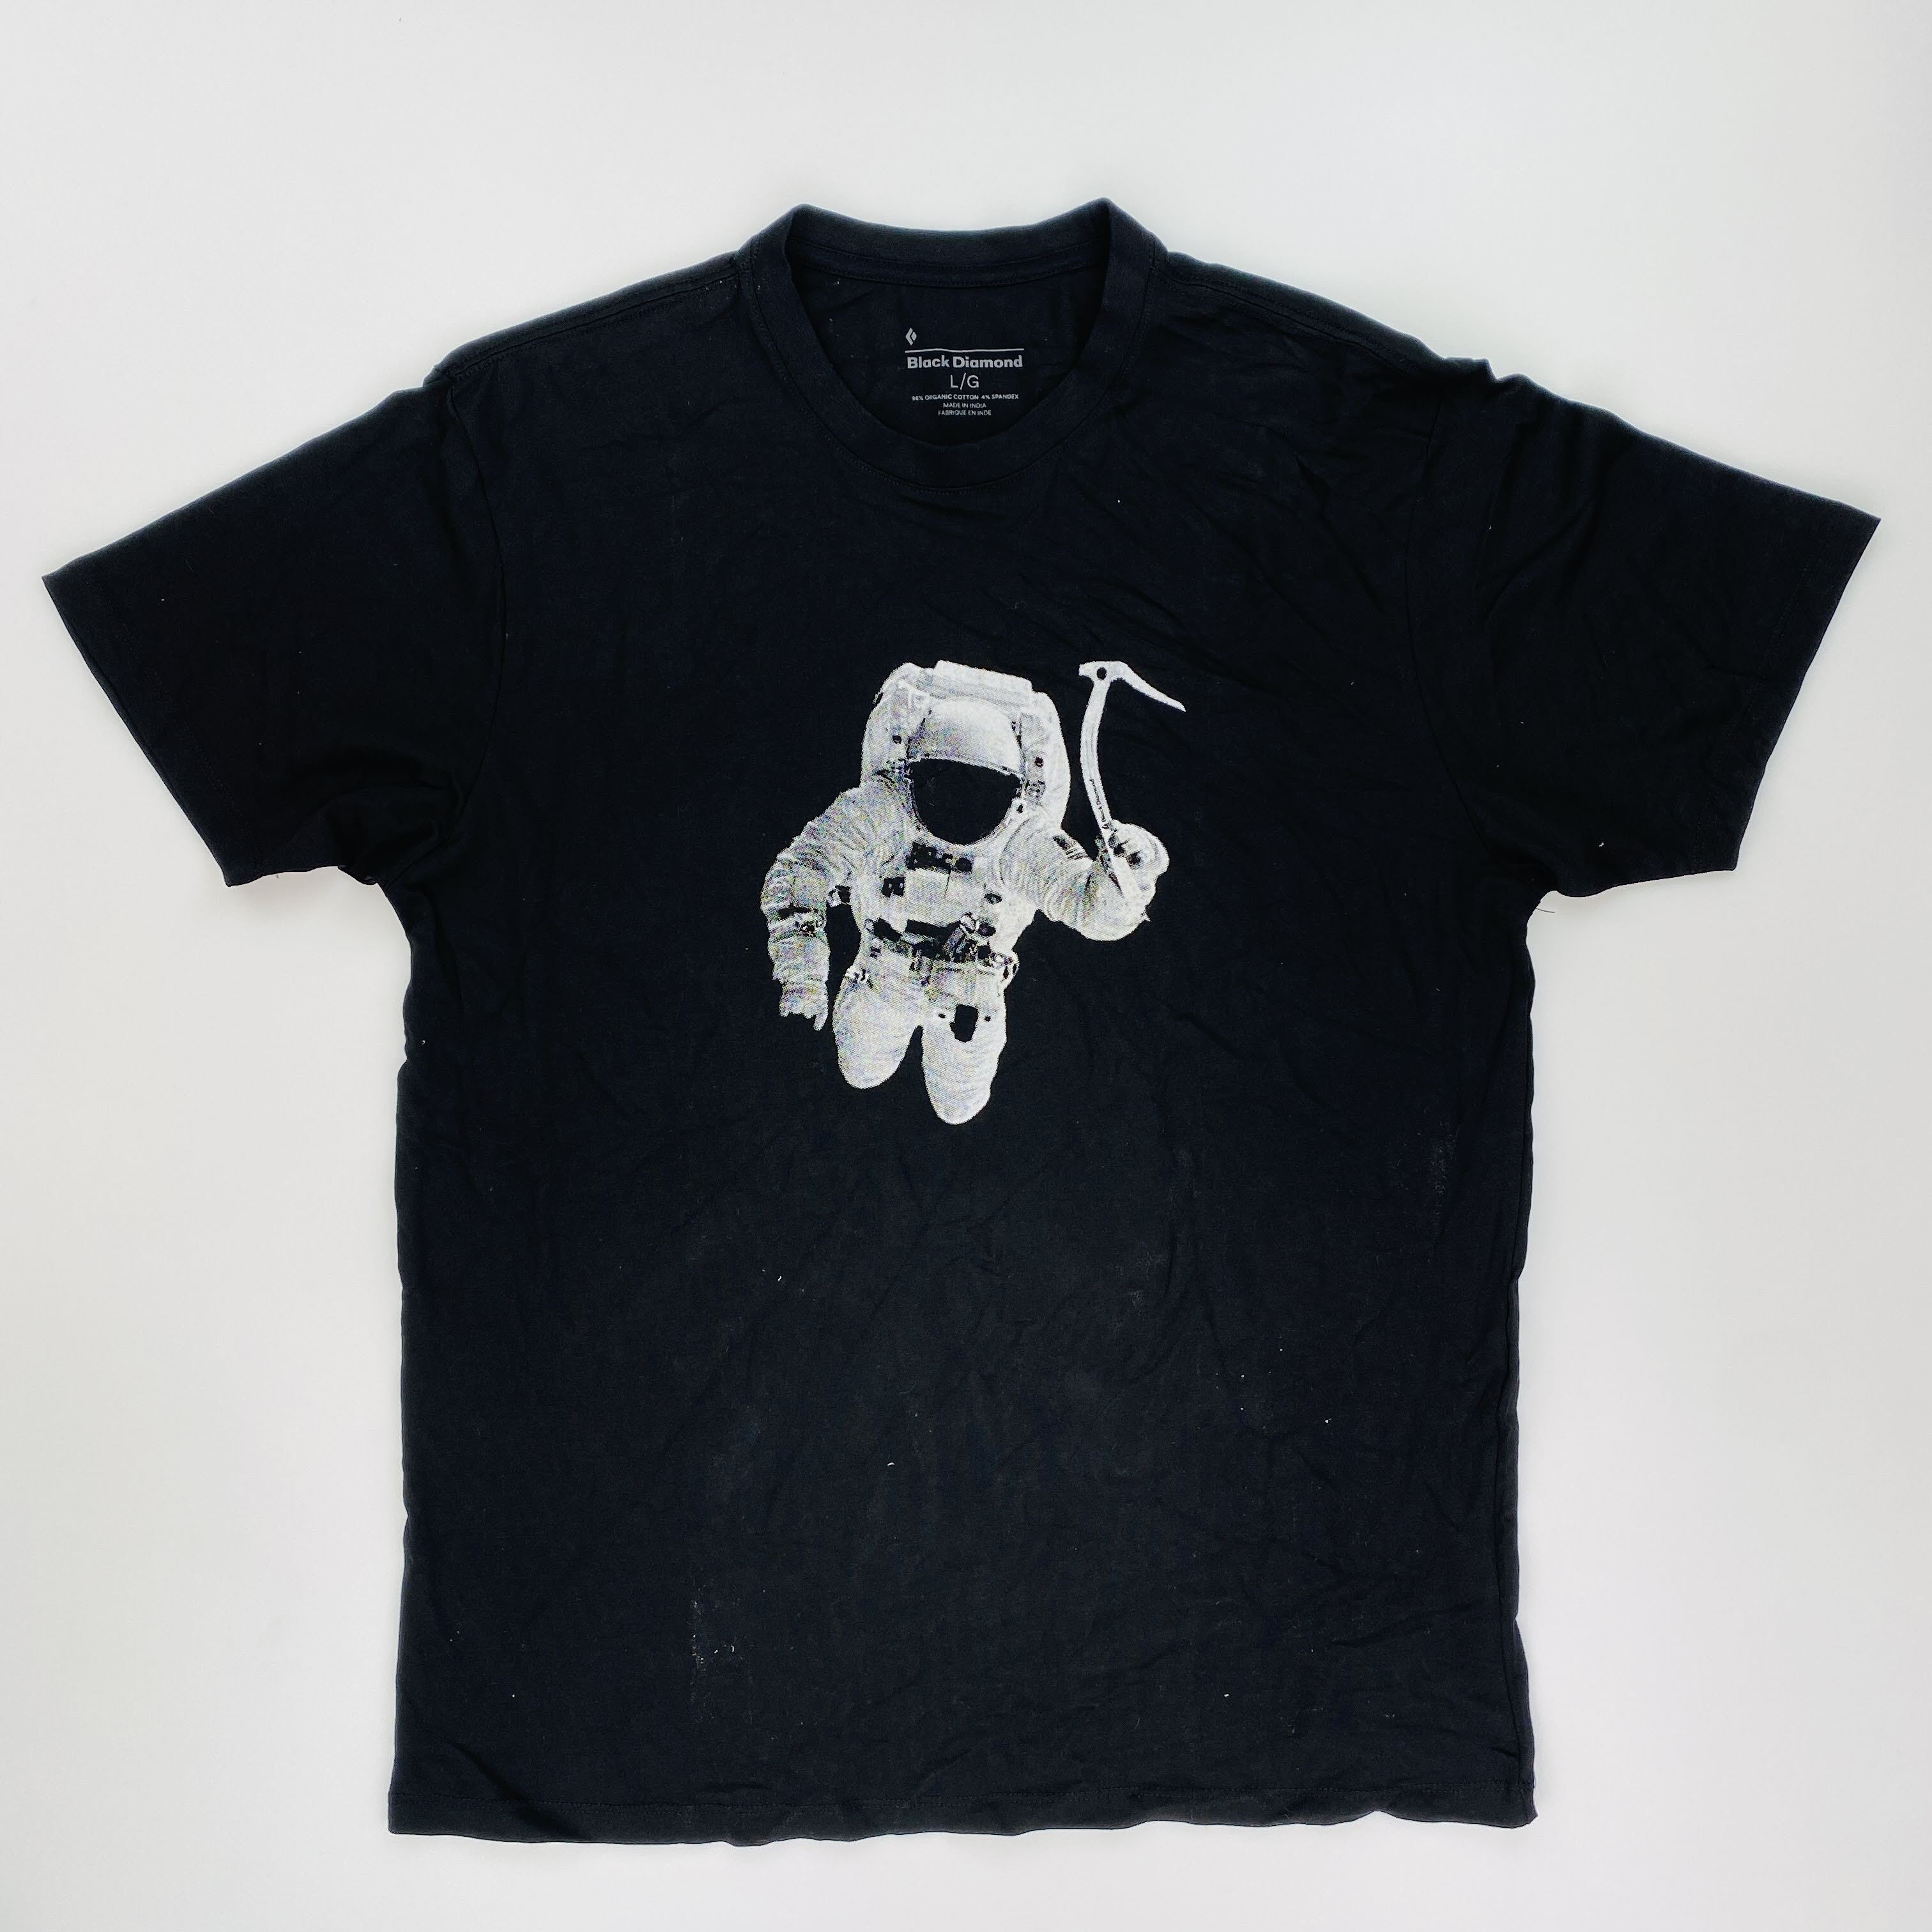 Black Diamond Ss Spaceshot Tee - Seconde main T-shirt homme - Noir - L | Hardloop